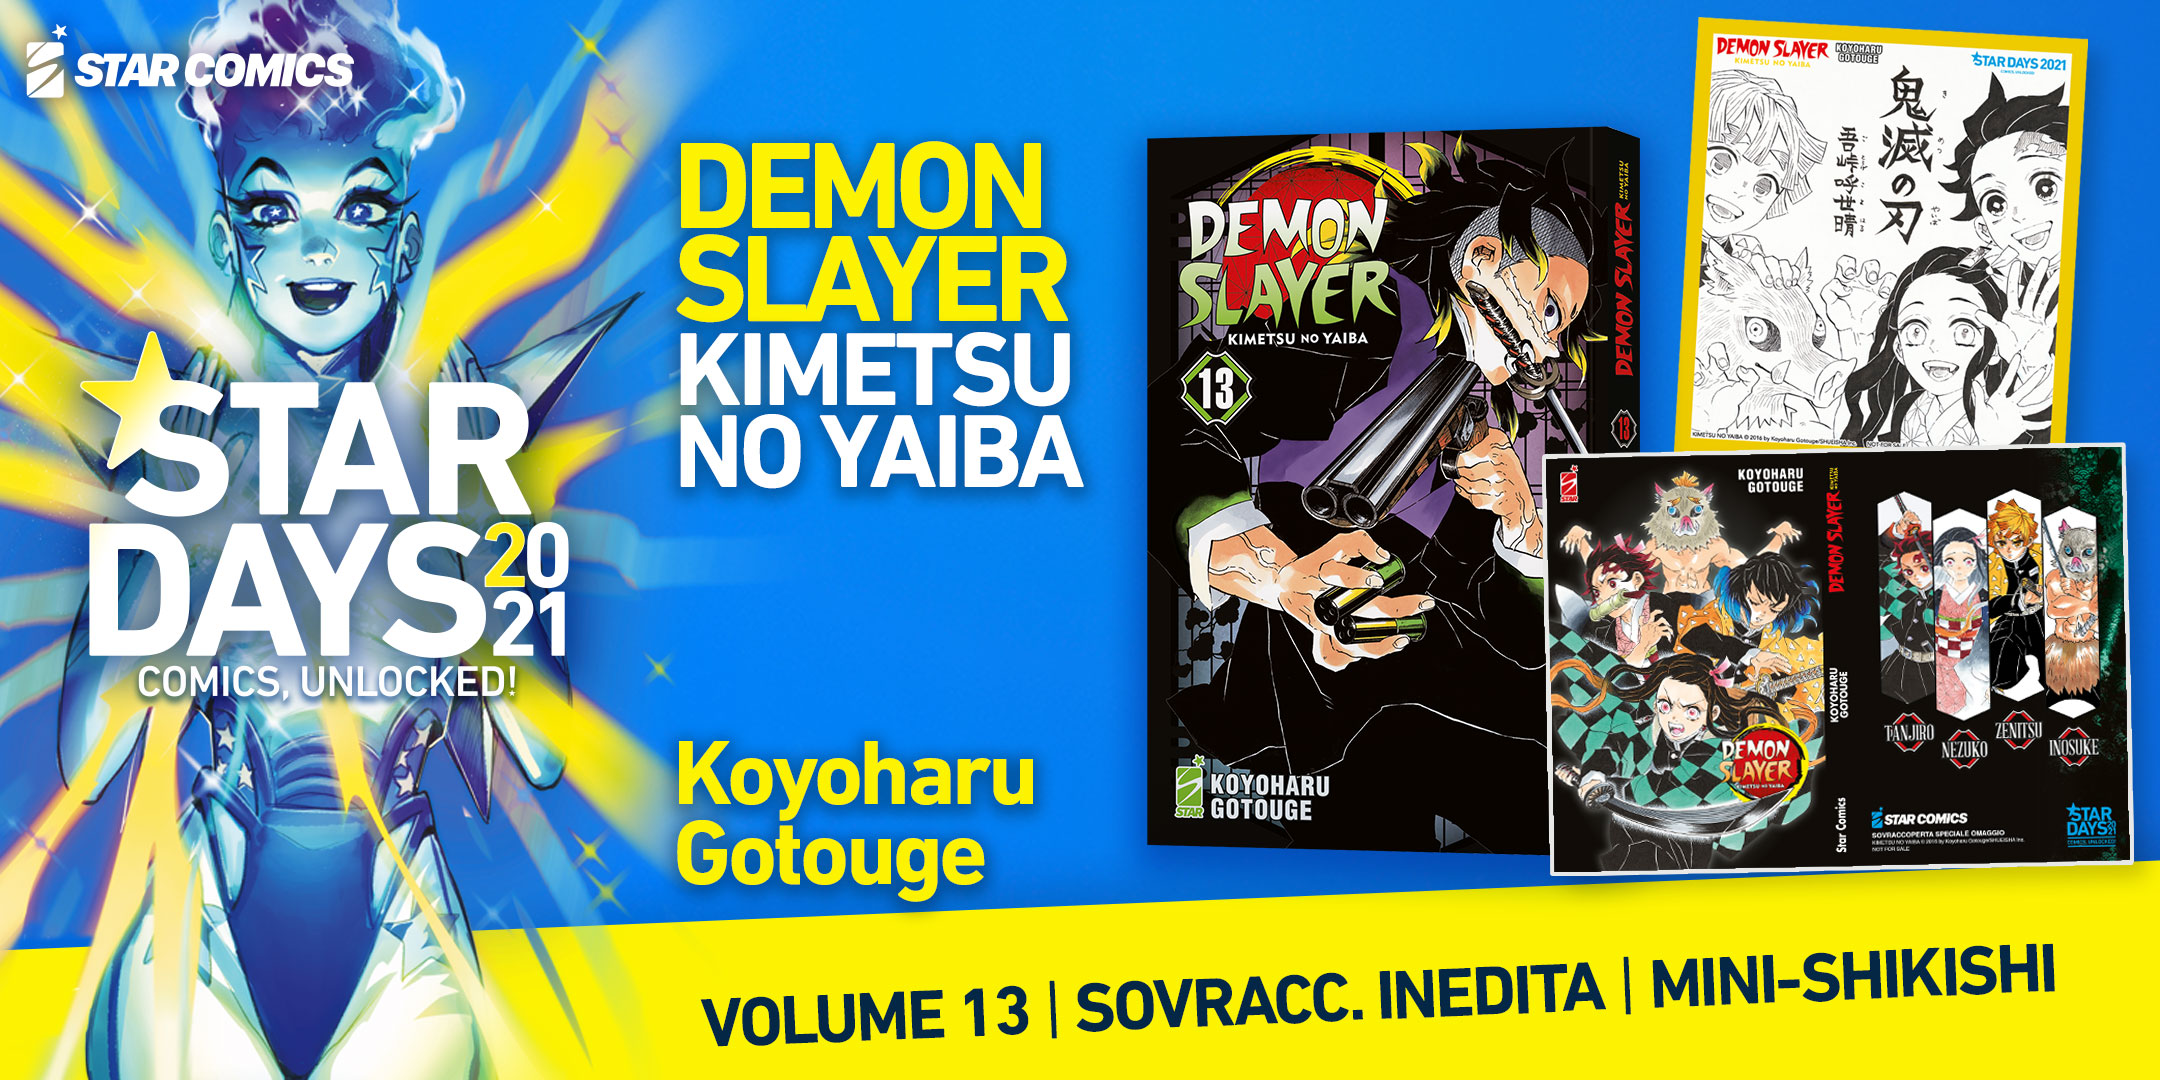 DEMON SLAYER - KIMETSU NO YAIBA: volume 13 + mini shikishi + sovraccoperta esclusiva